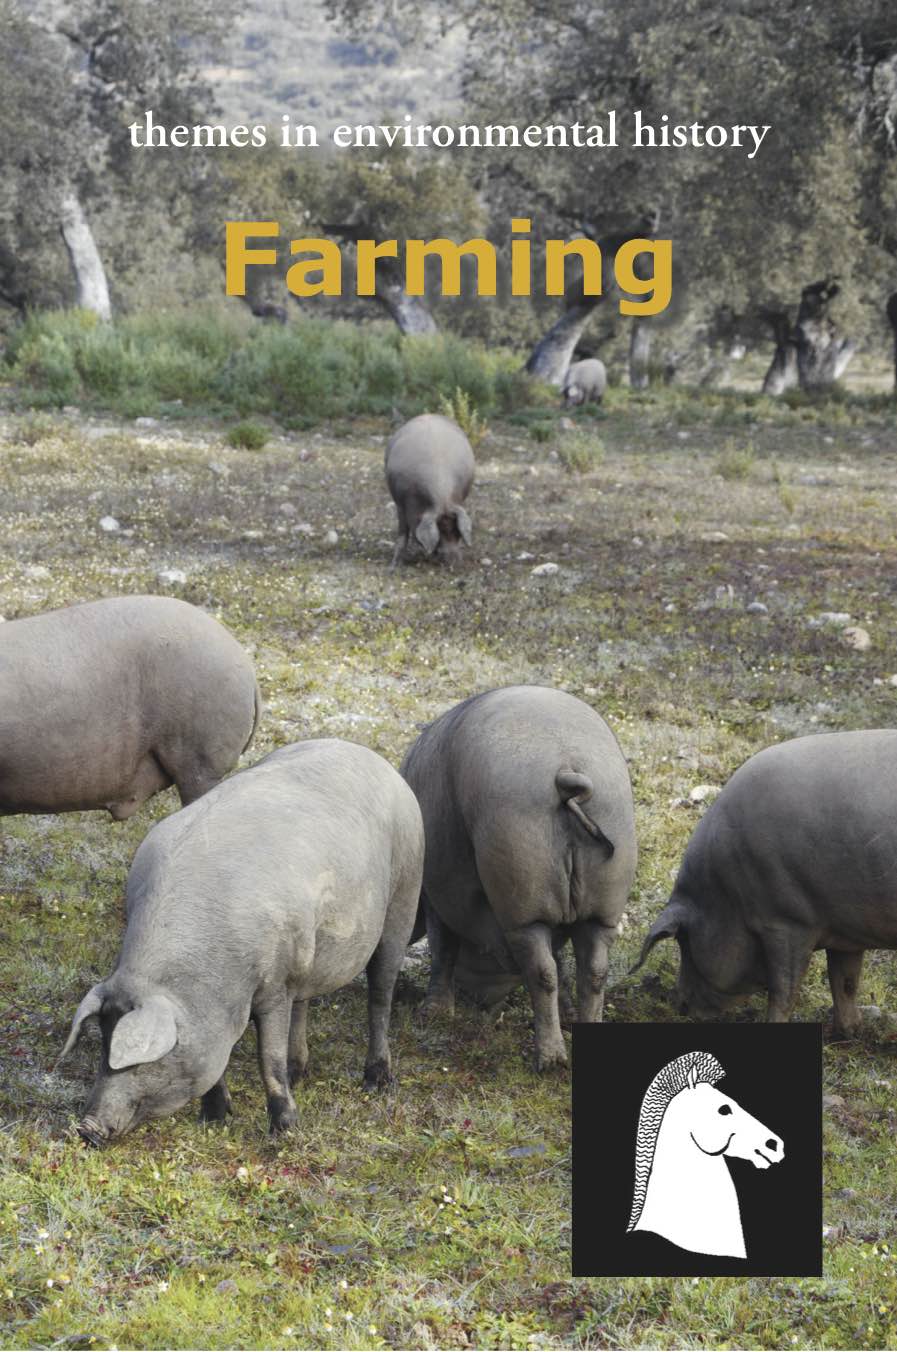 Farming (The White Horse Press, 2016)